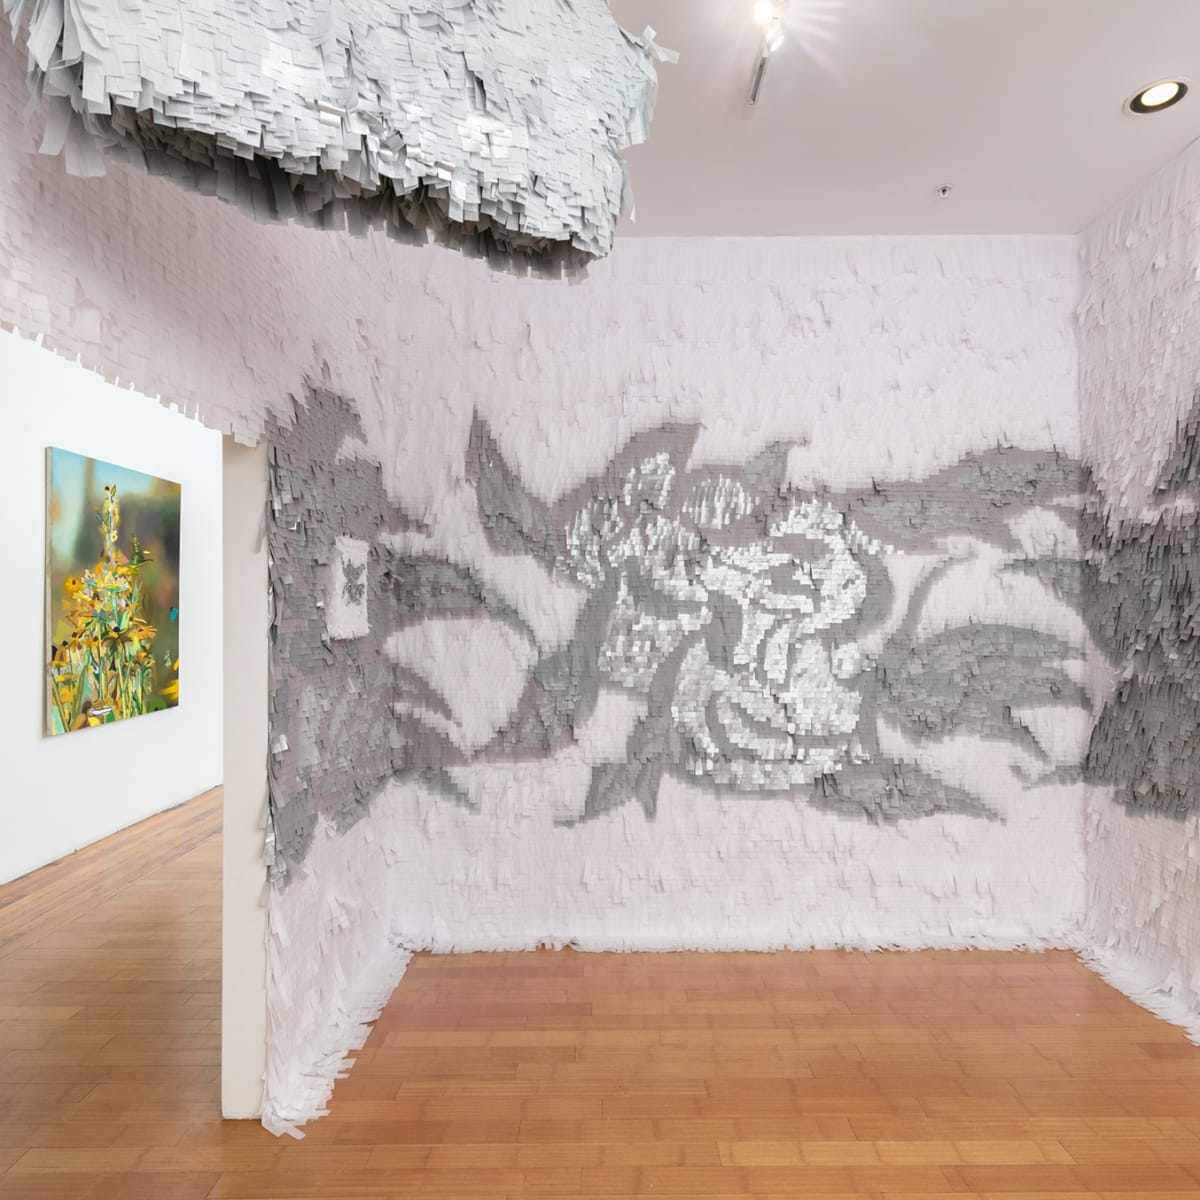 Justin Favela brings his inventive piñata-style art to three major Denver galleries this summer